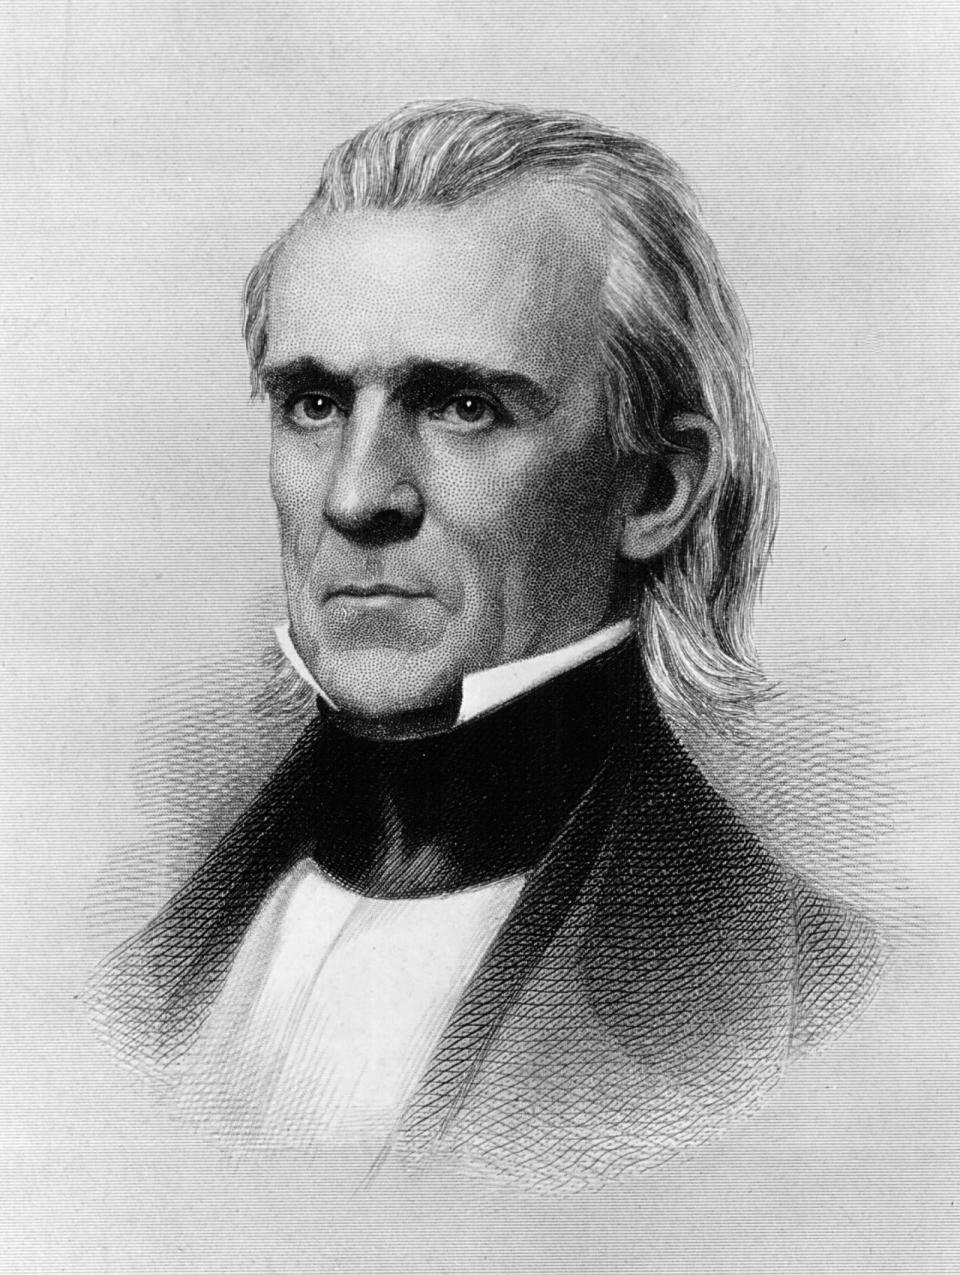 James Knox Polk